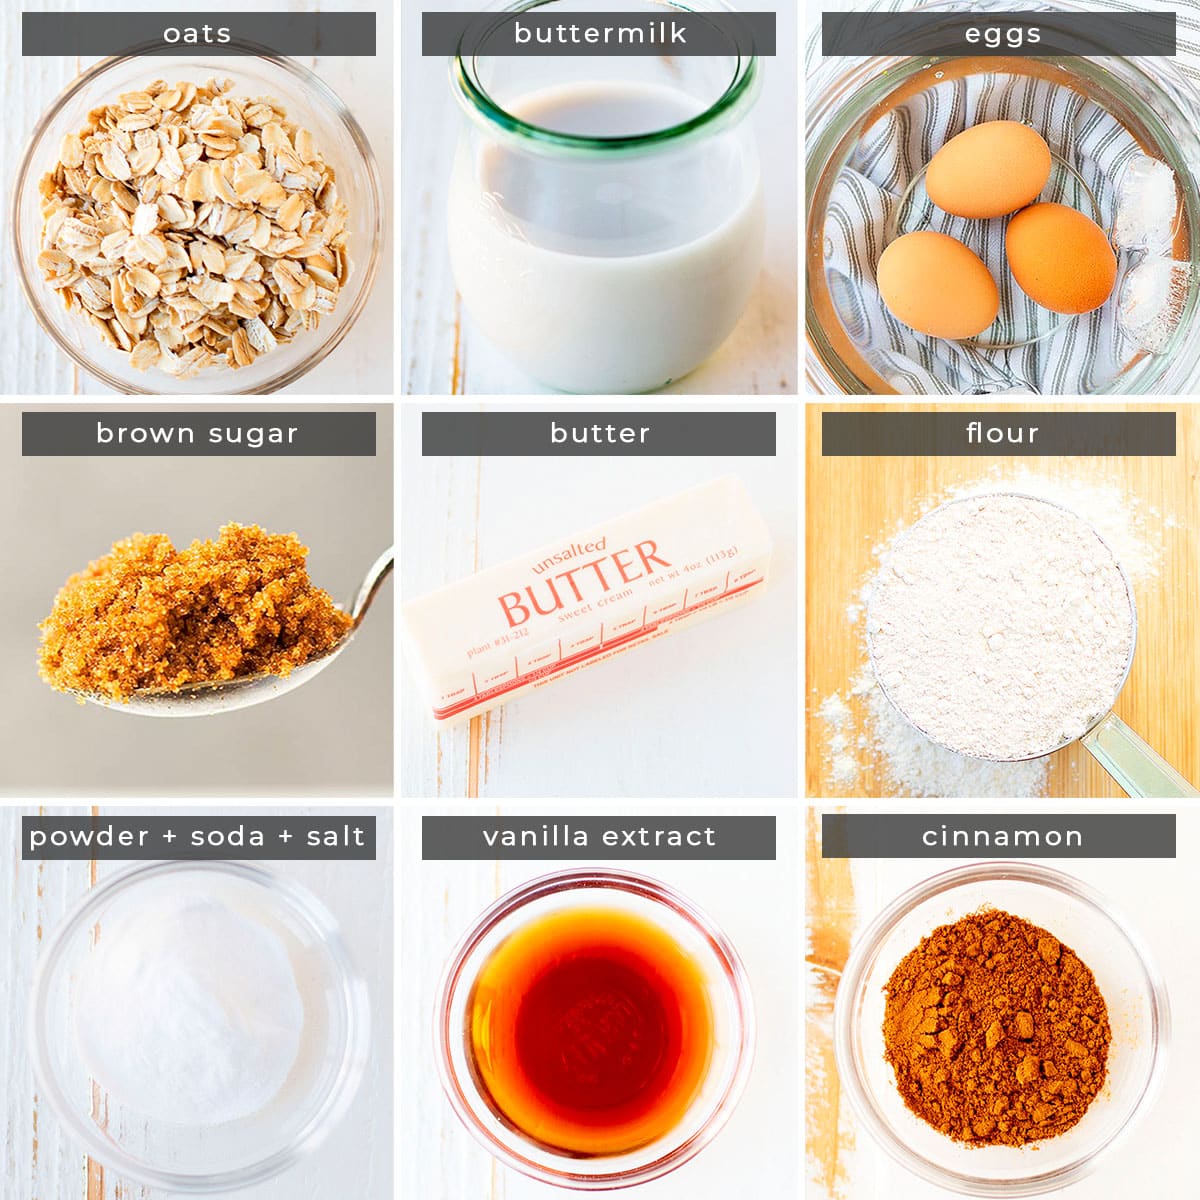 image showing recipe ingredients oats, buttermilk, eggs, brown sugar, butter, flour, powder + soda + salt, vanilla extract, and cinnamon.